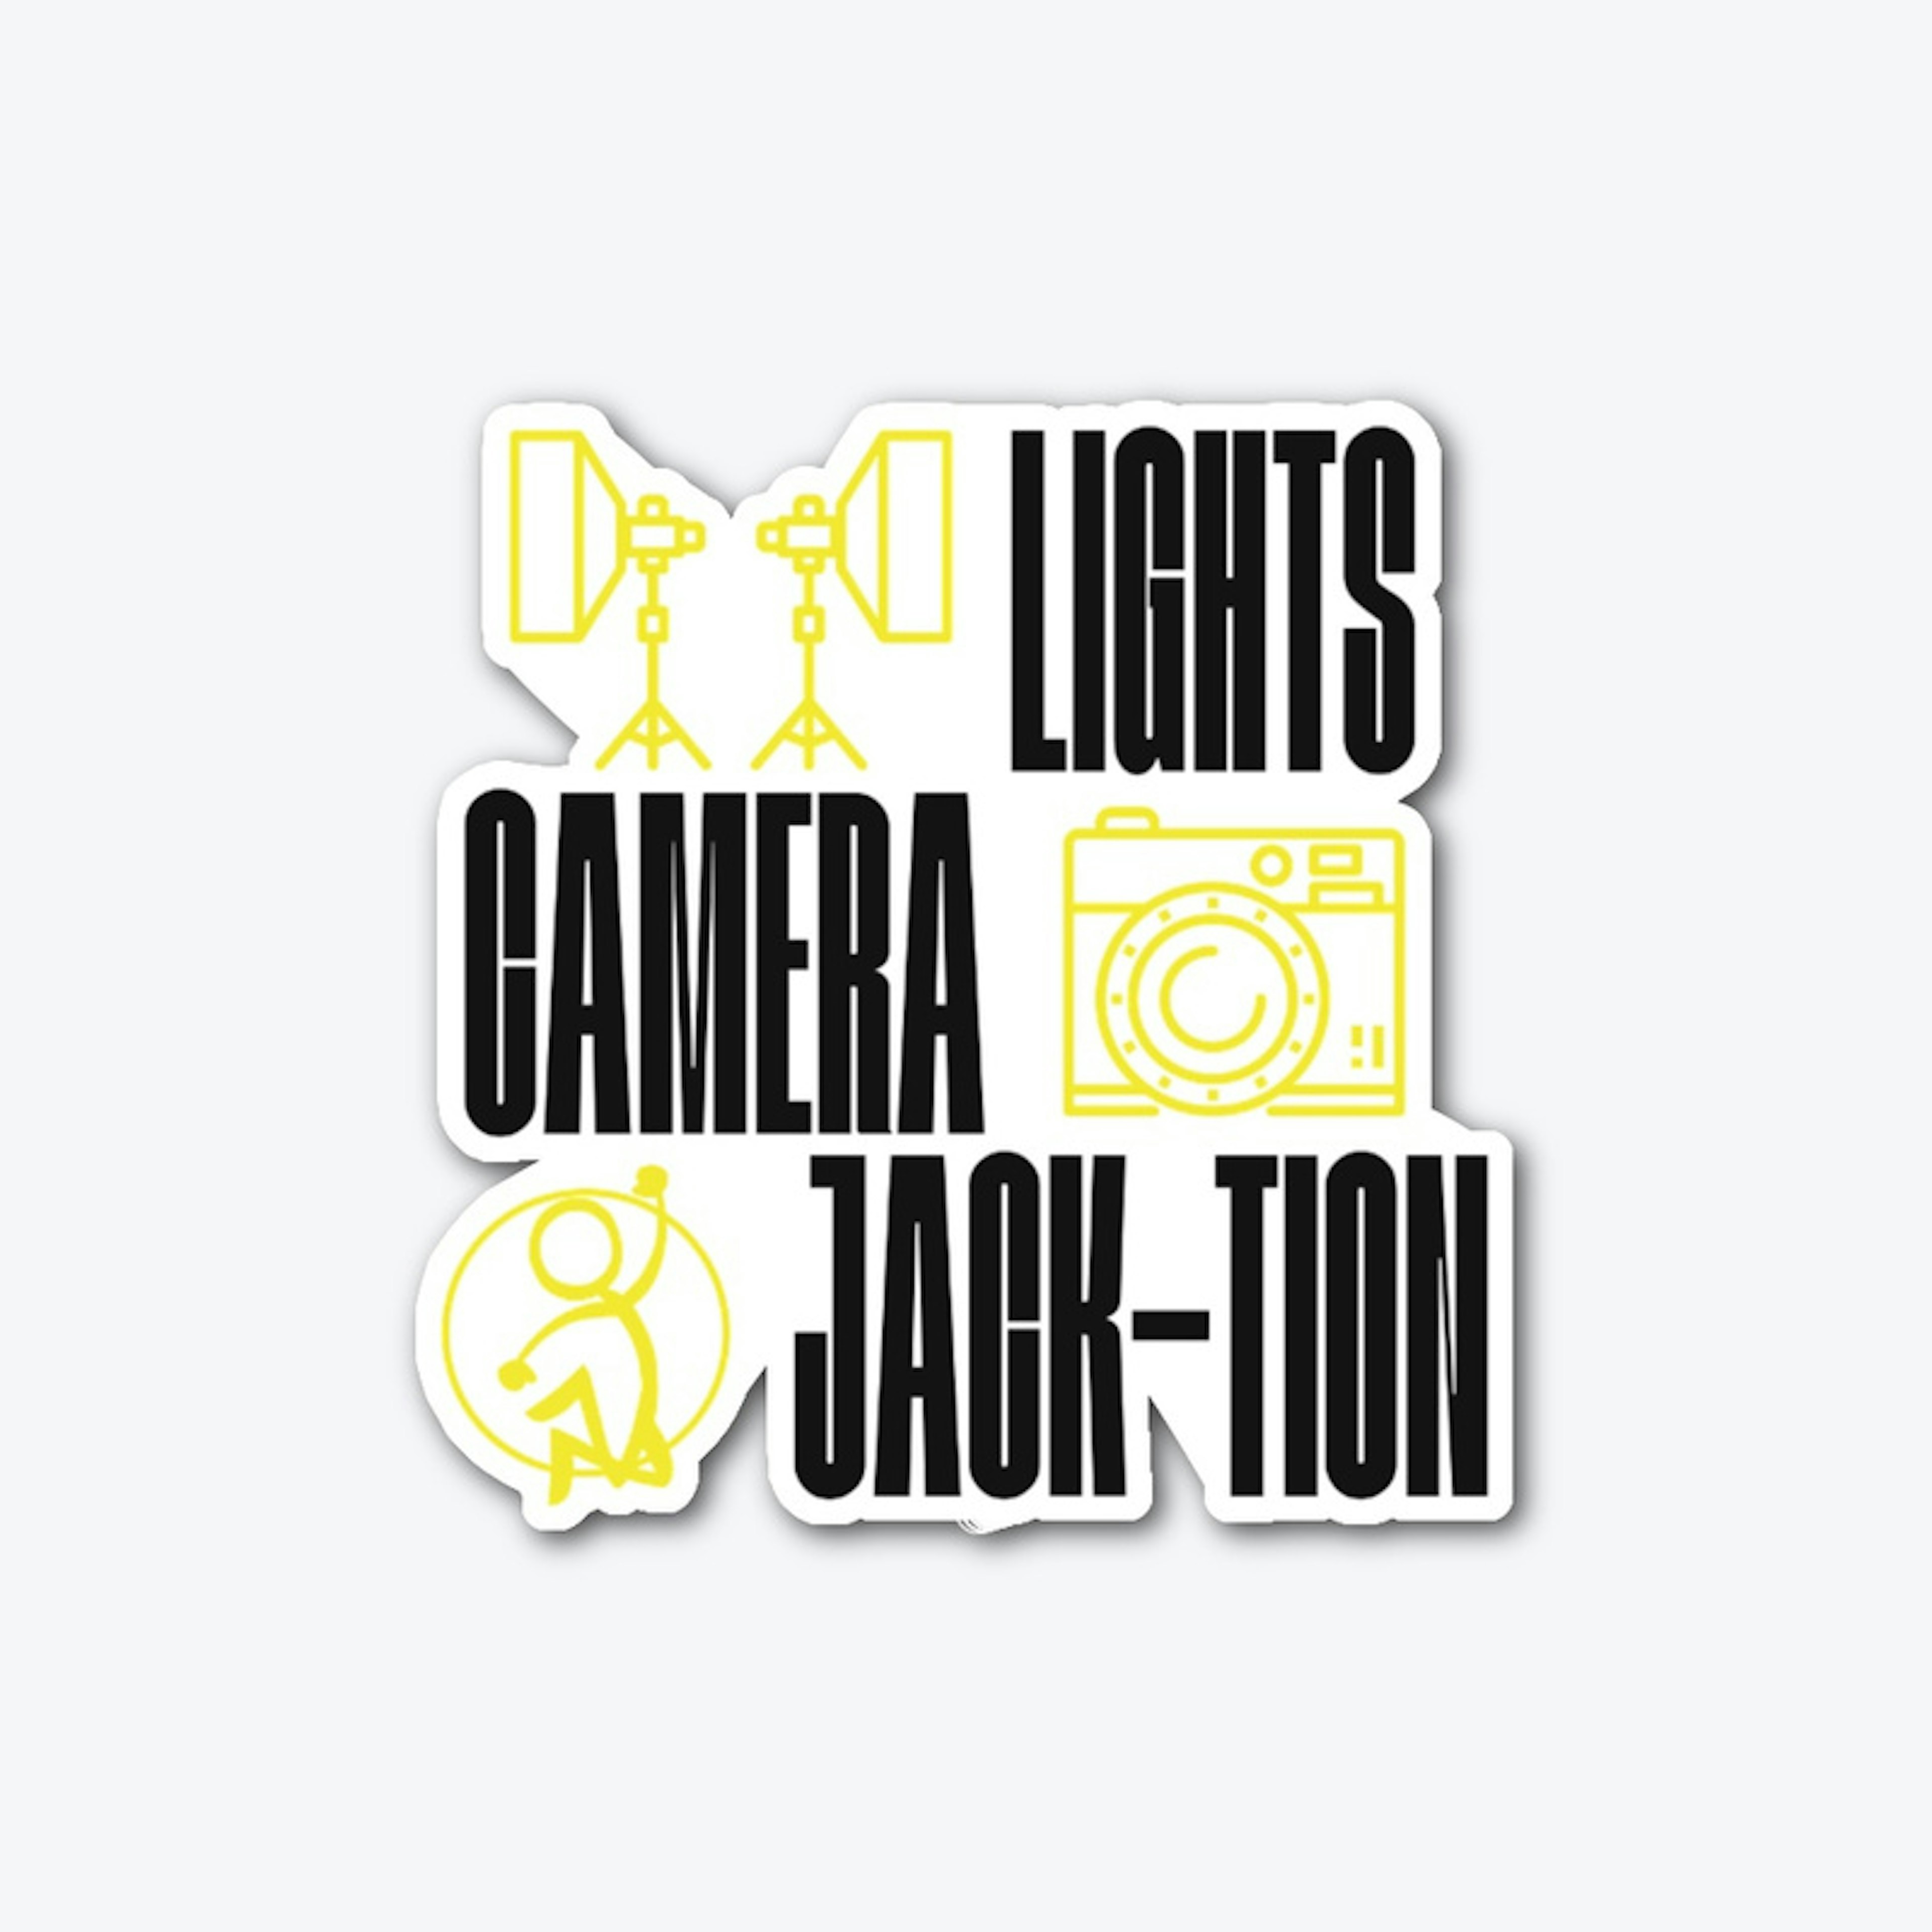 Lights. Camera. Jack-tion!